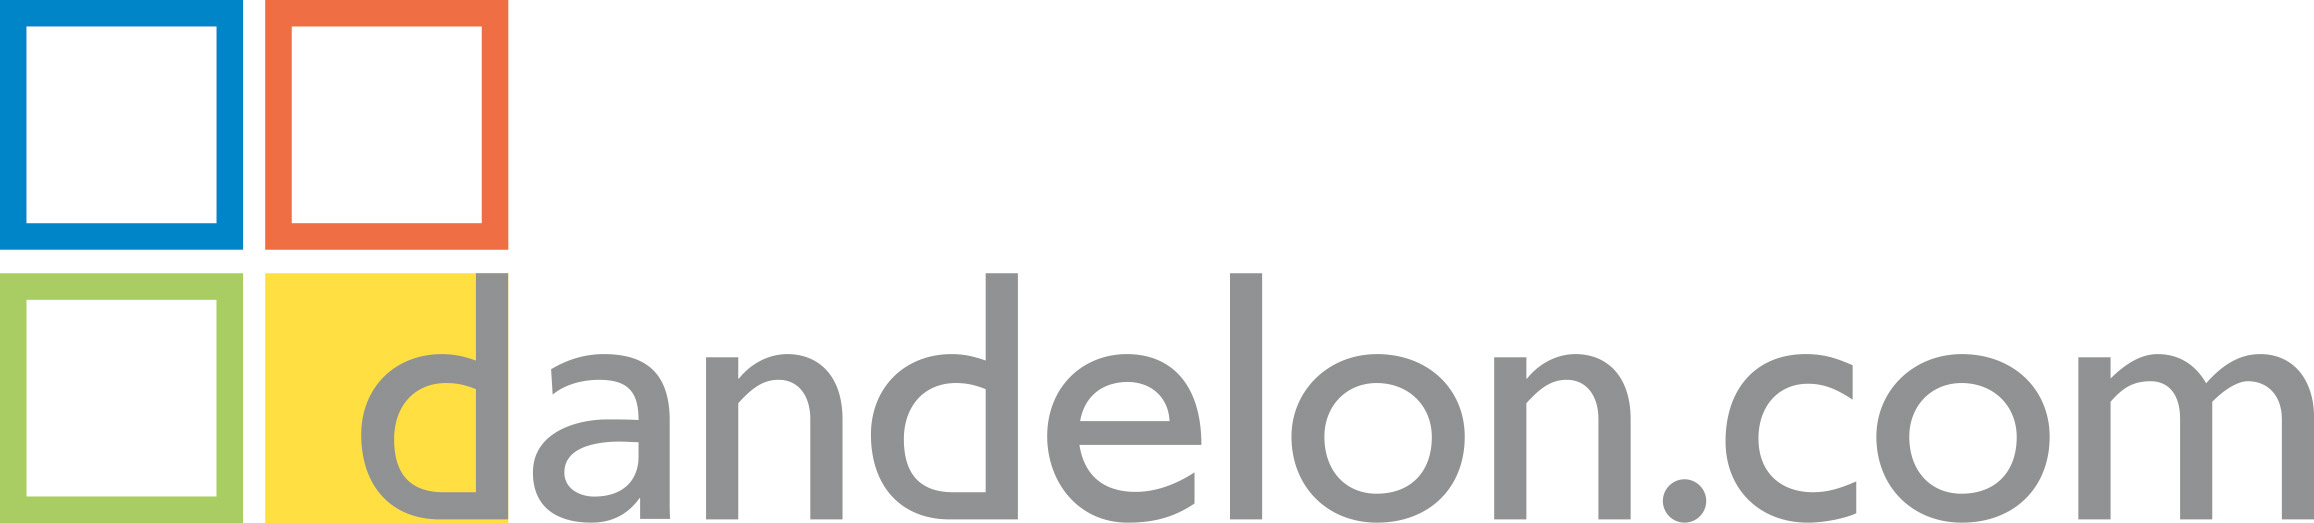 dandelon.com Logotype